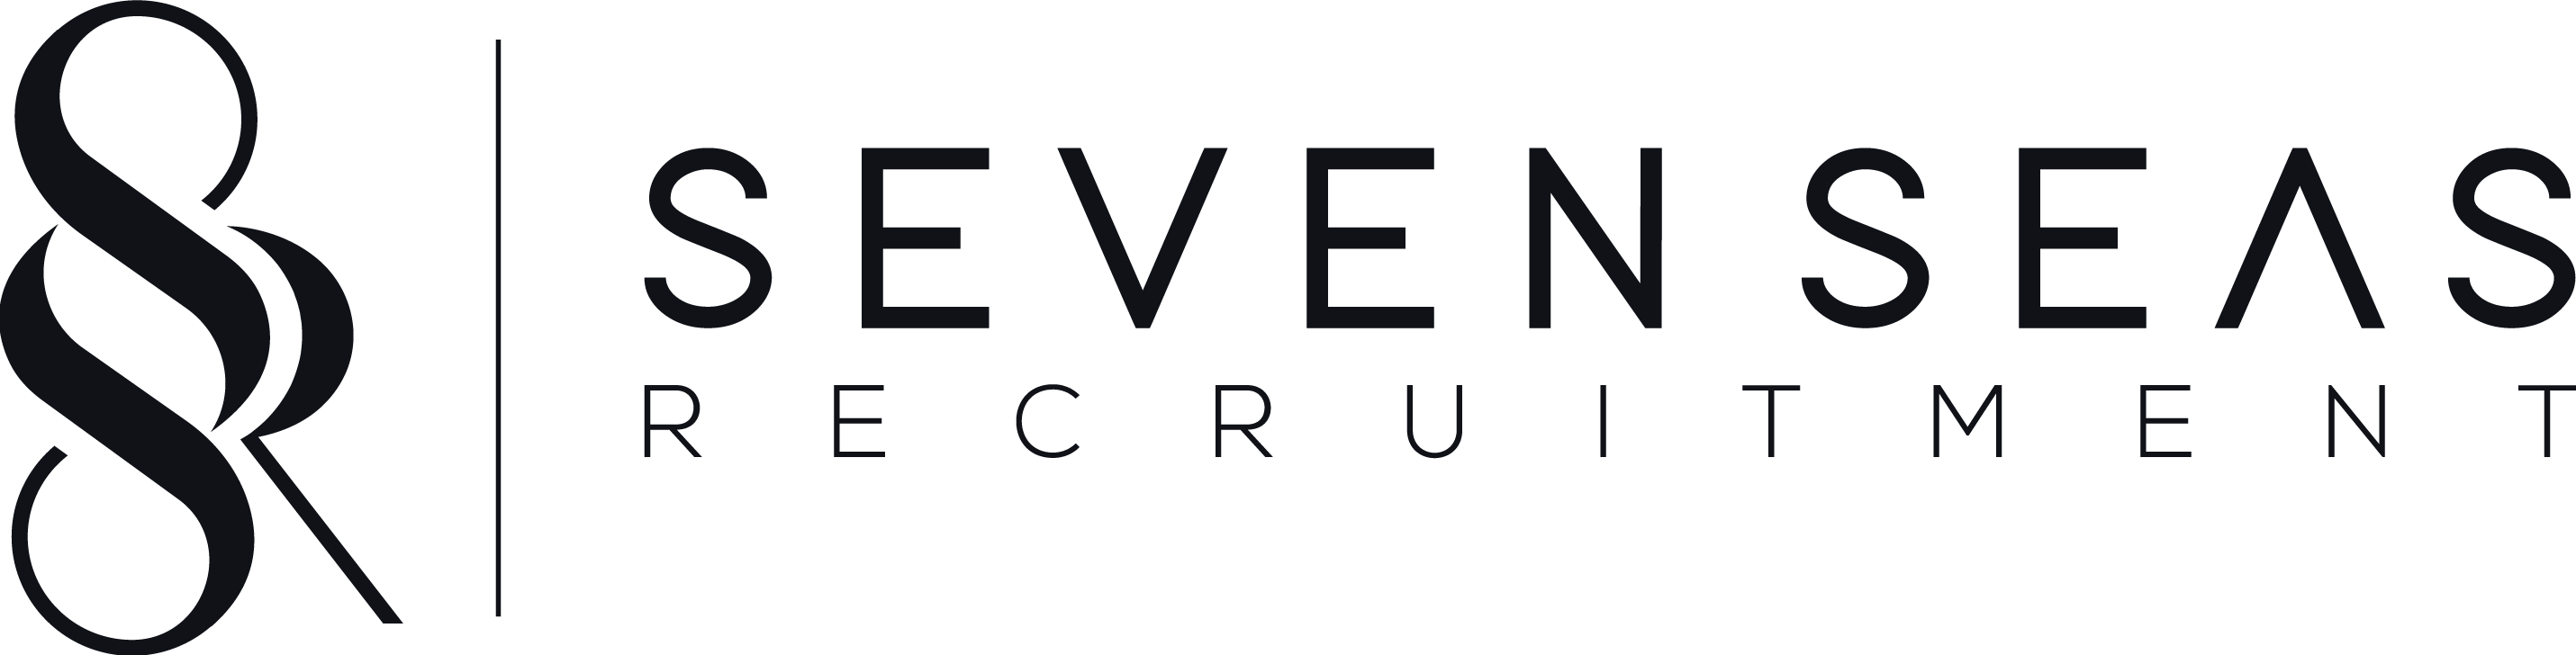 sevenseasrecruitment.com